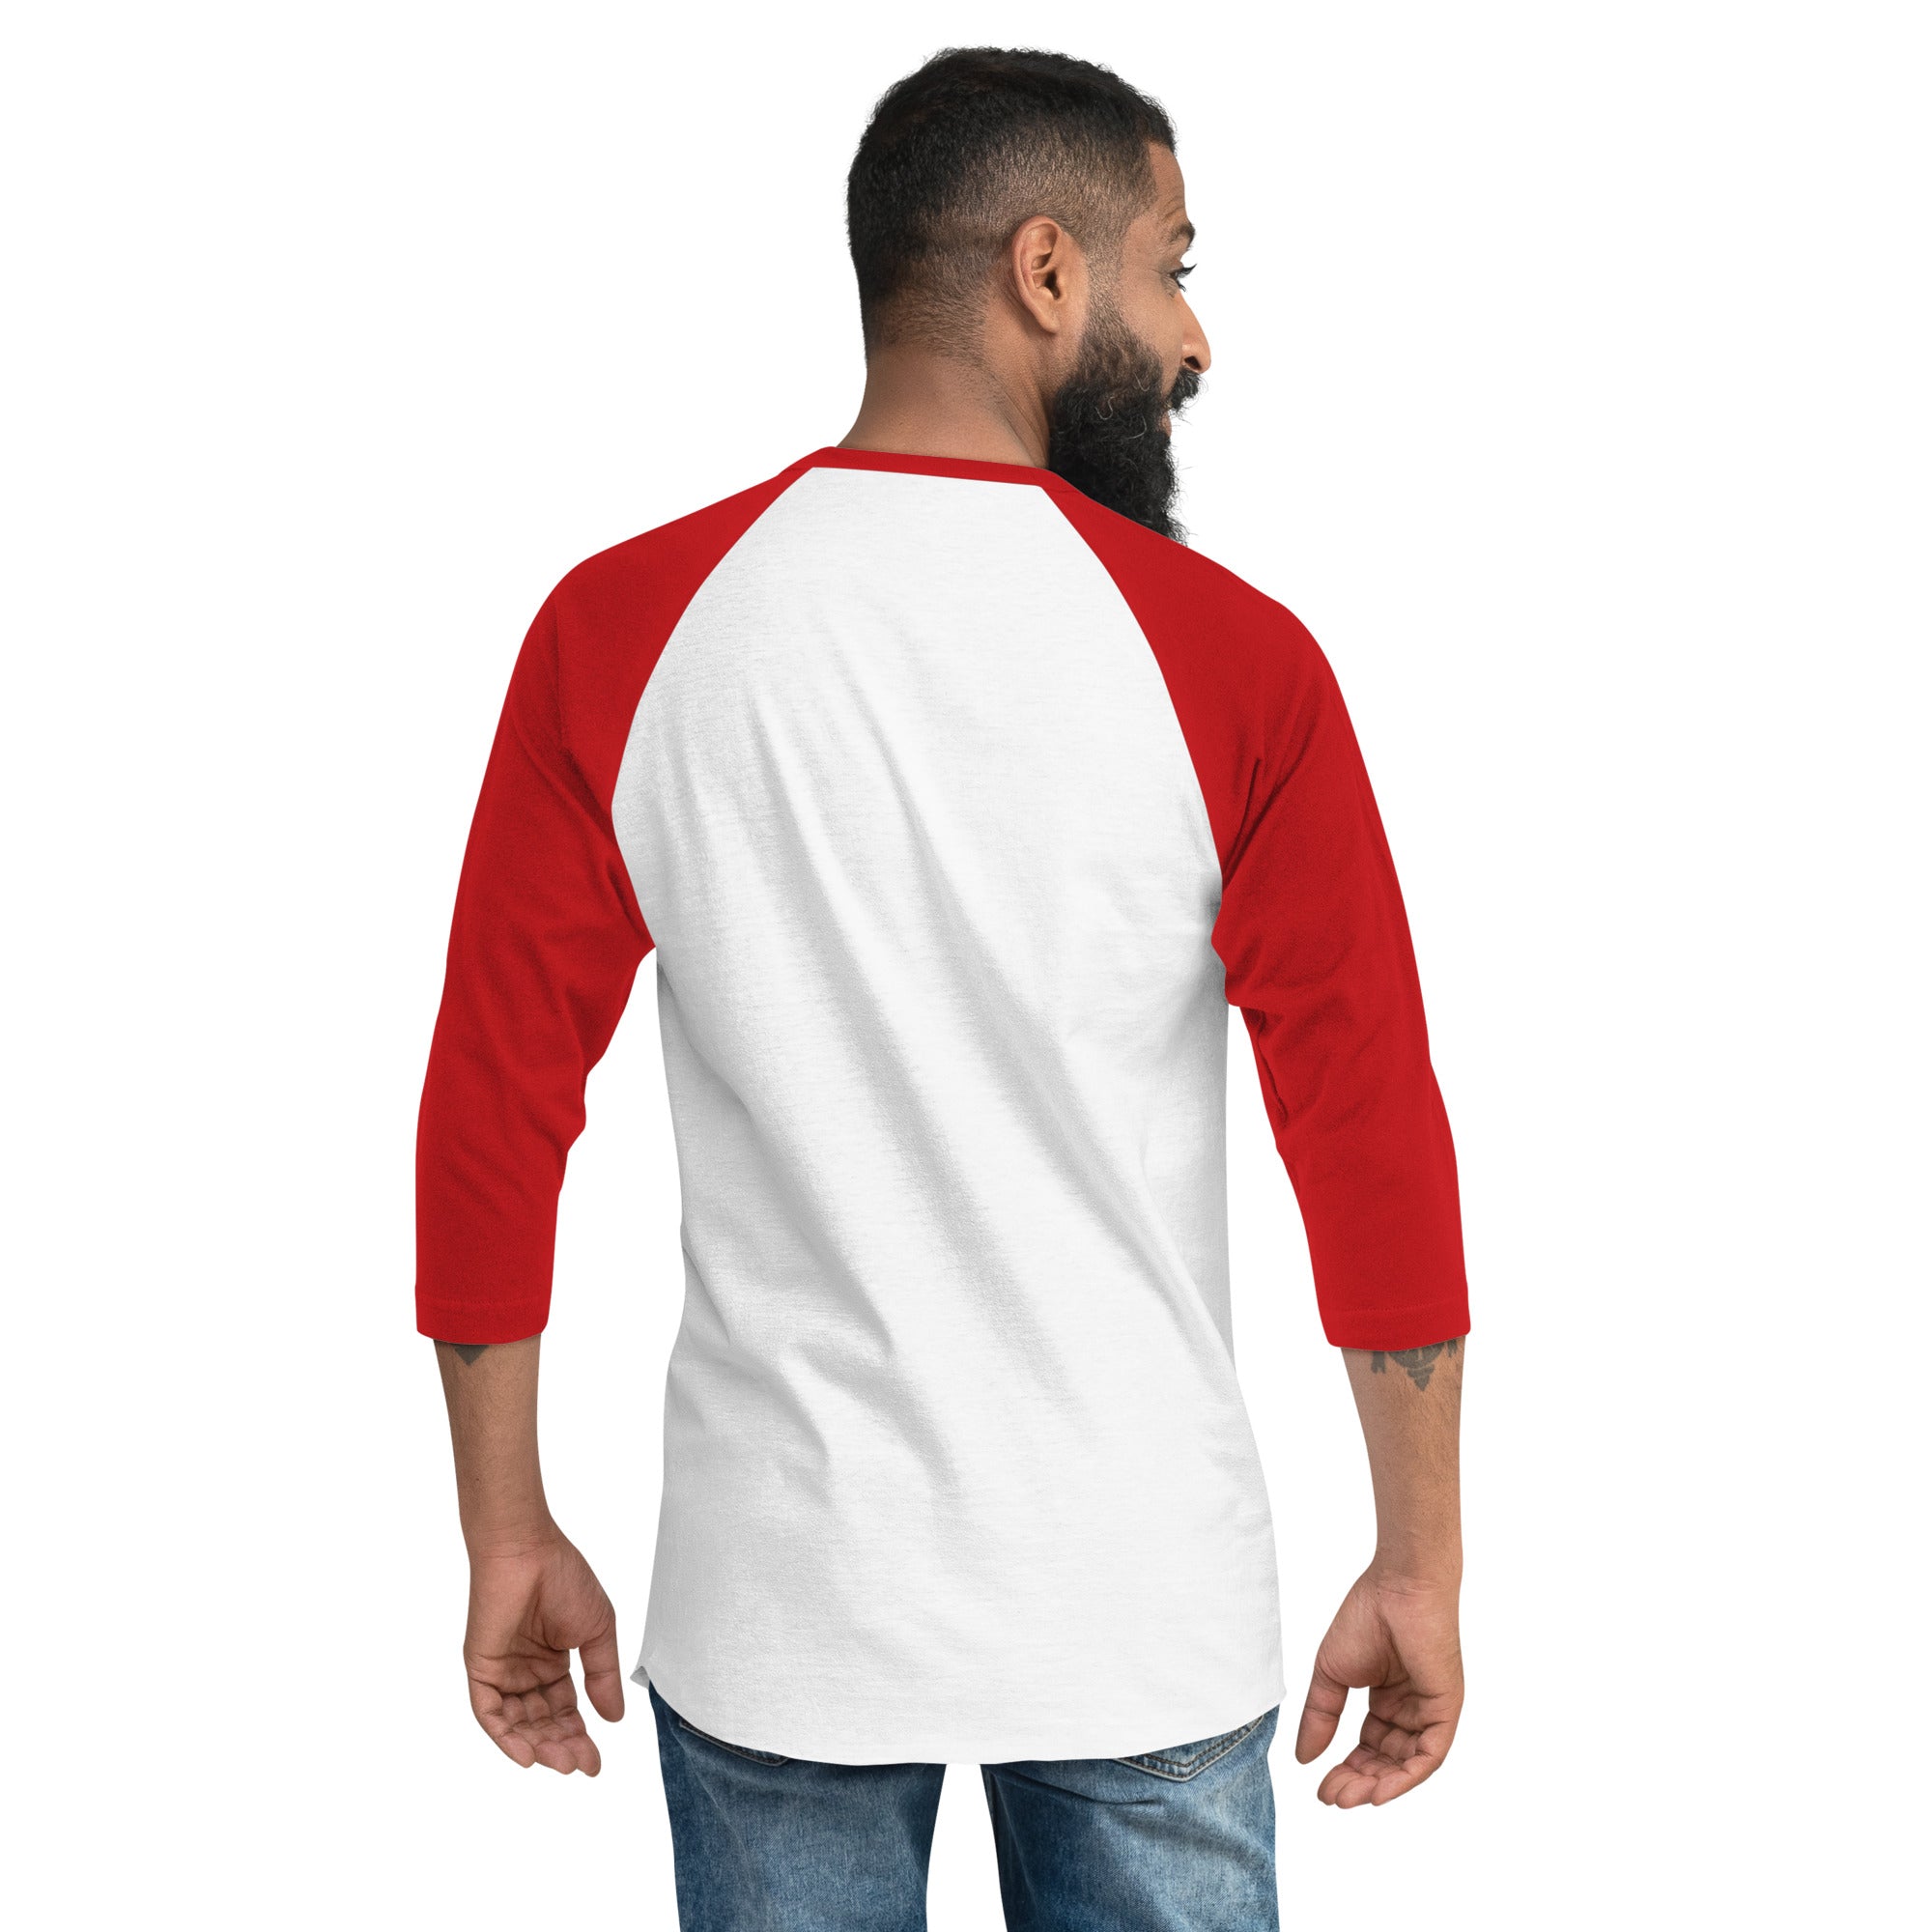 PioneerPauly Raglan 3/4 Sleeve Shirt with Dark Logo